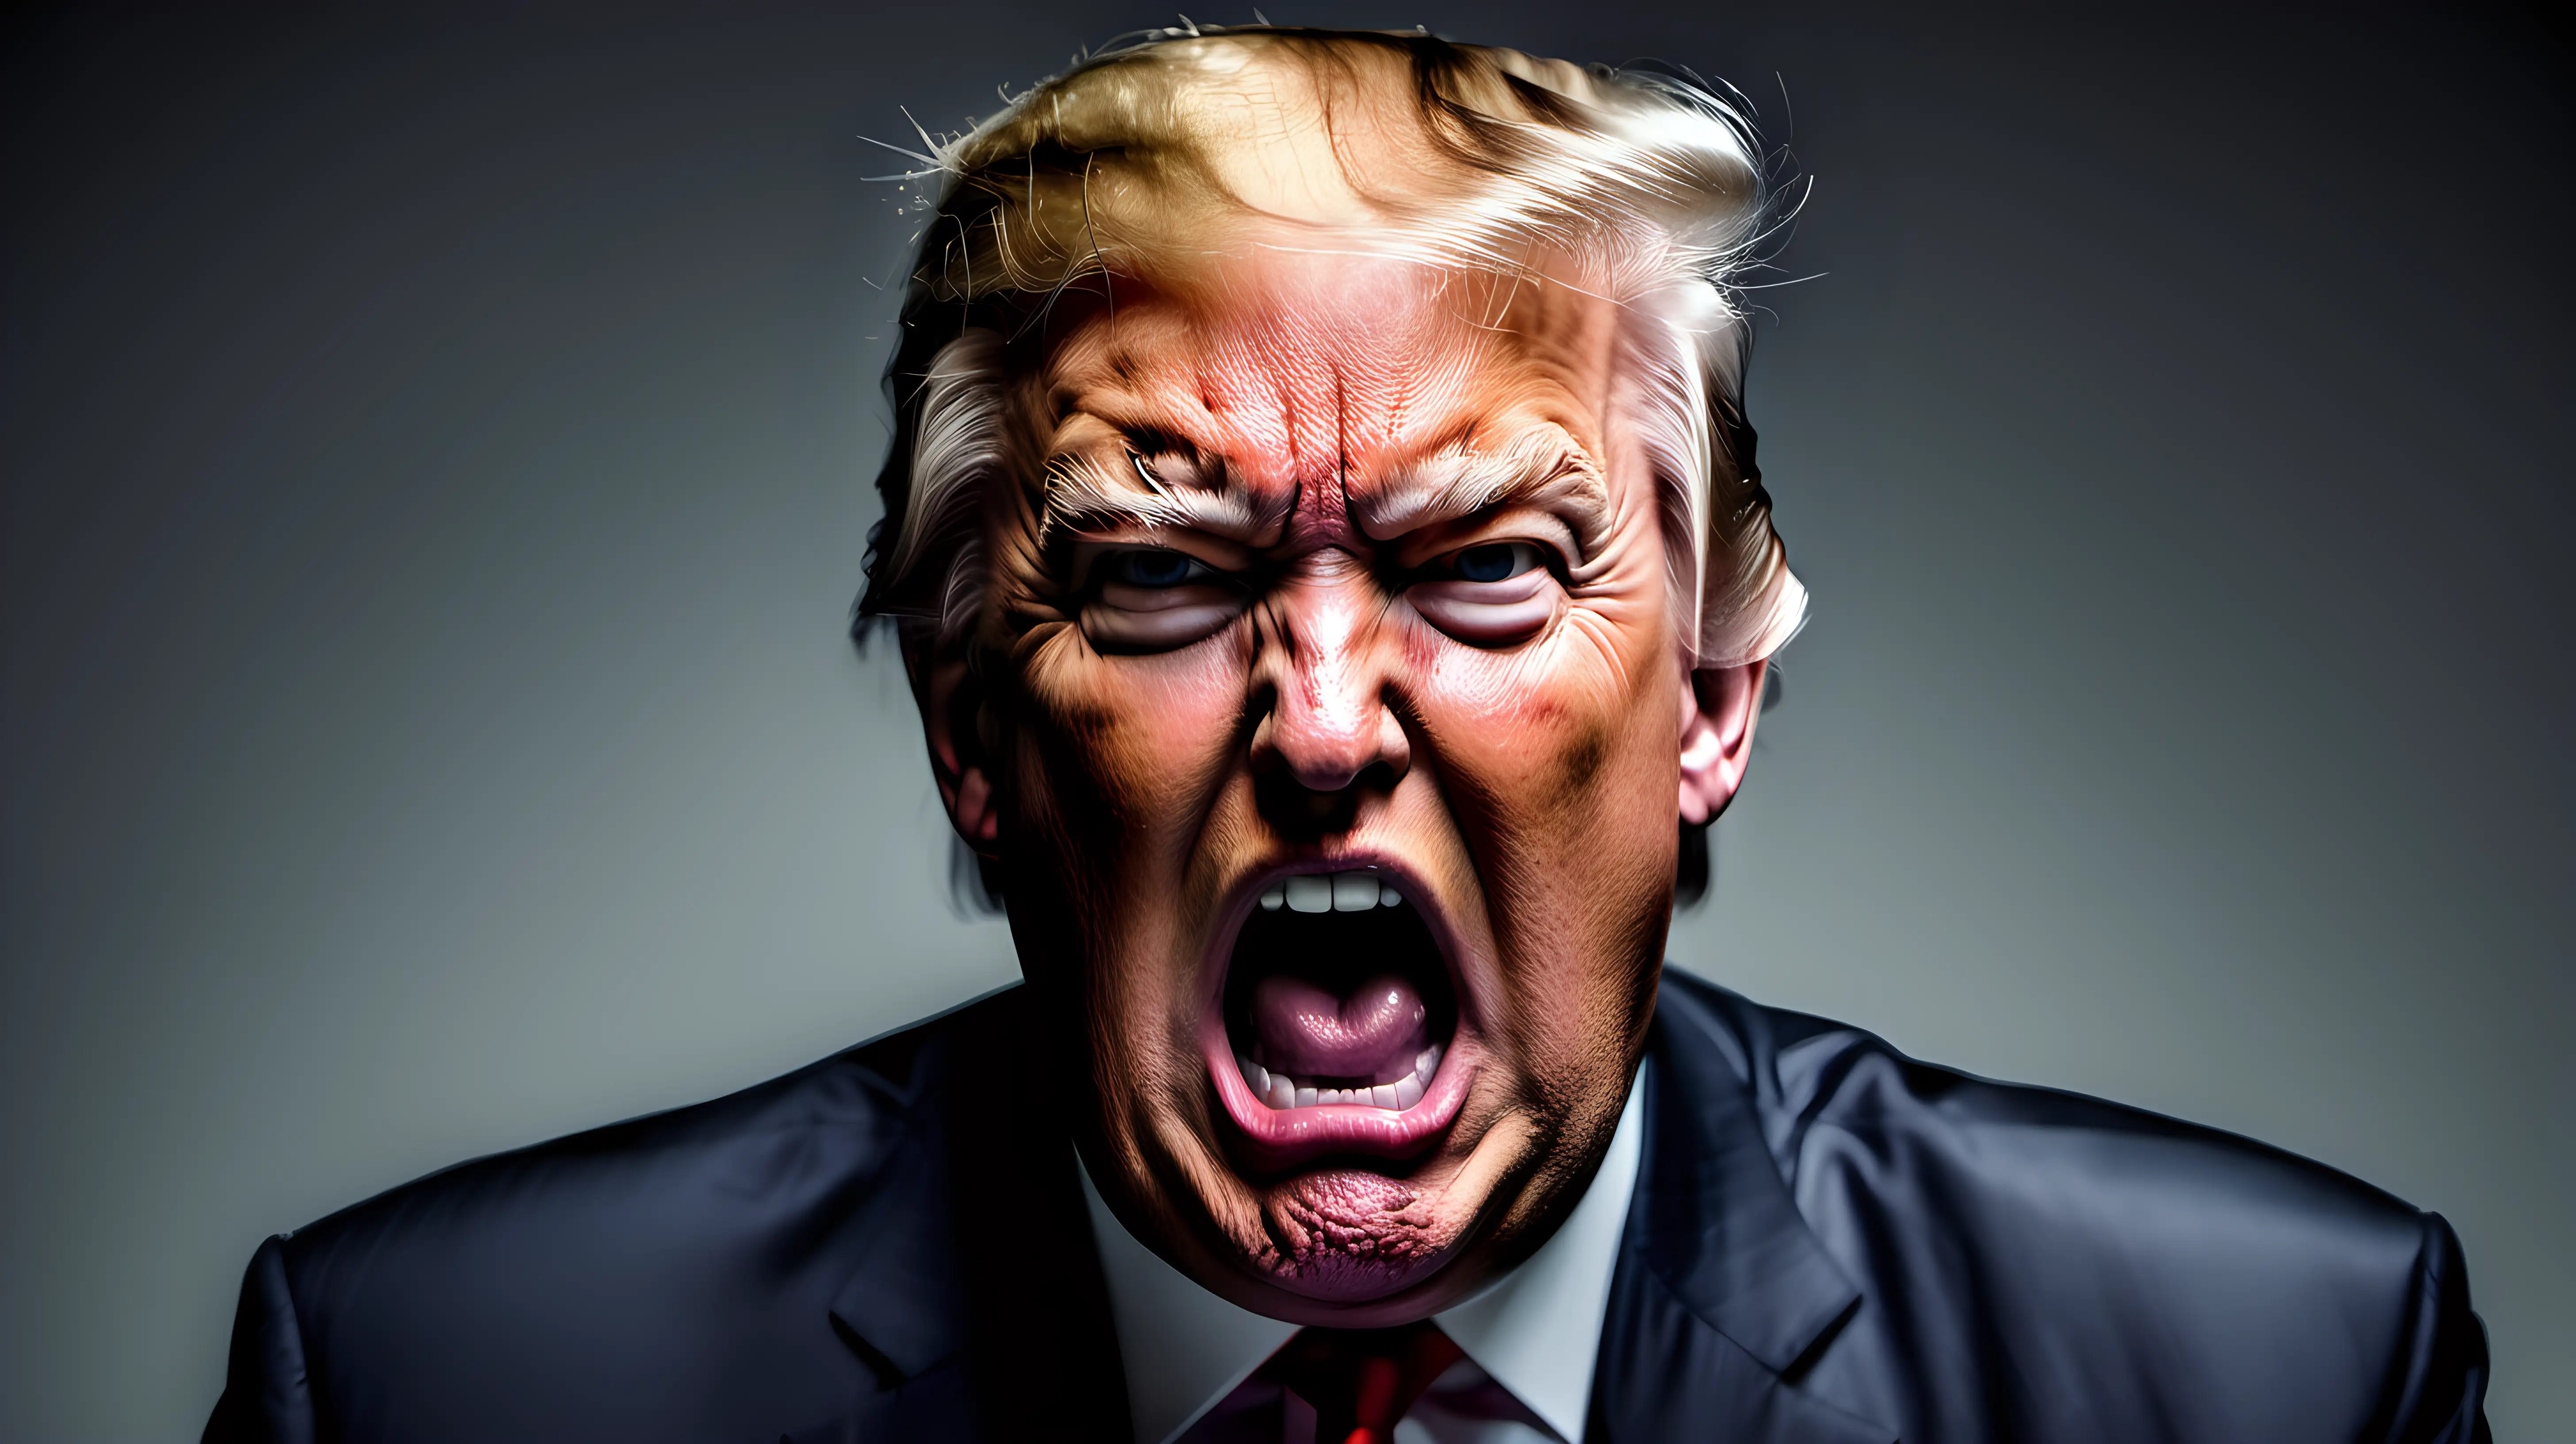 Furious Donald Trump Portrait in Striking PostModern Style